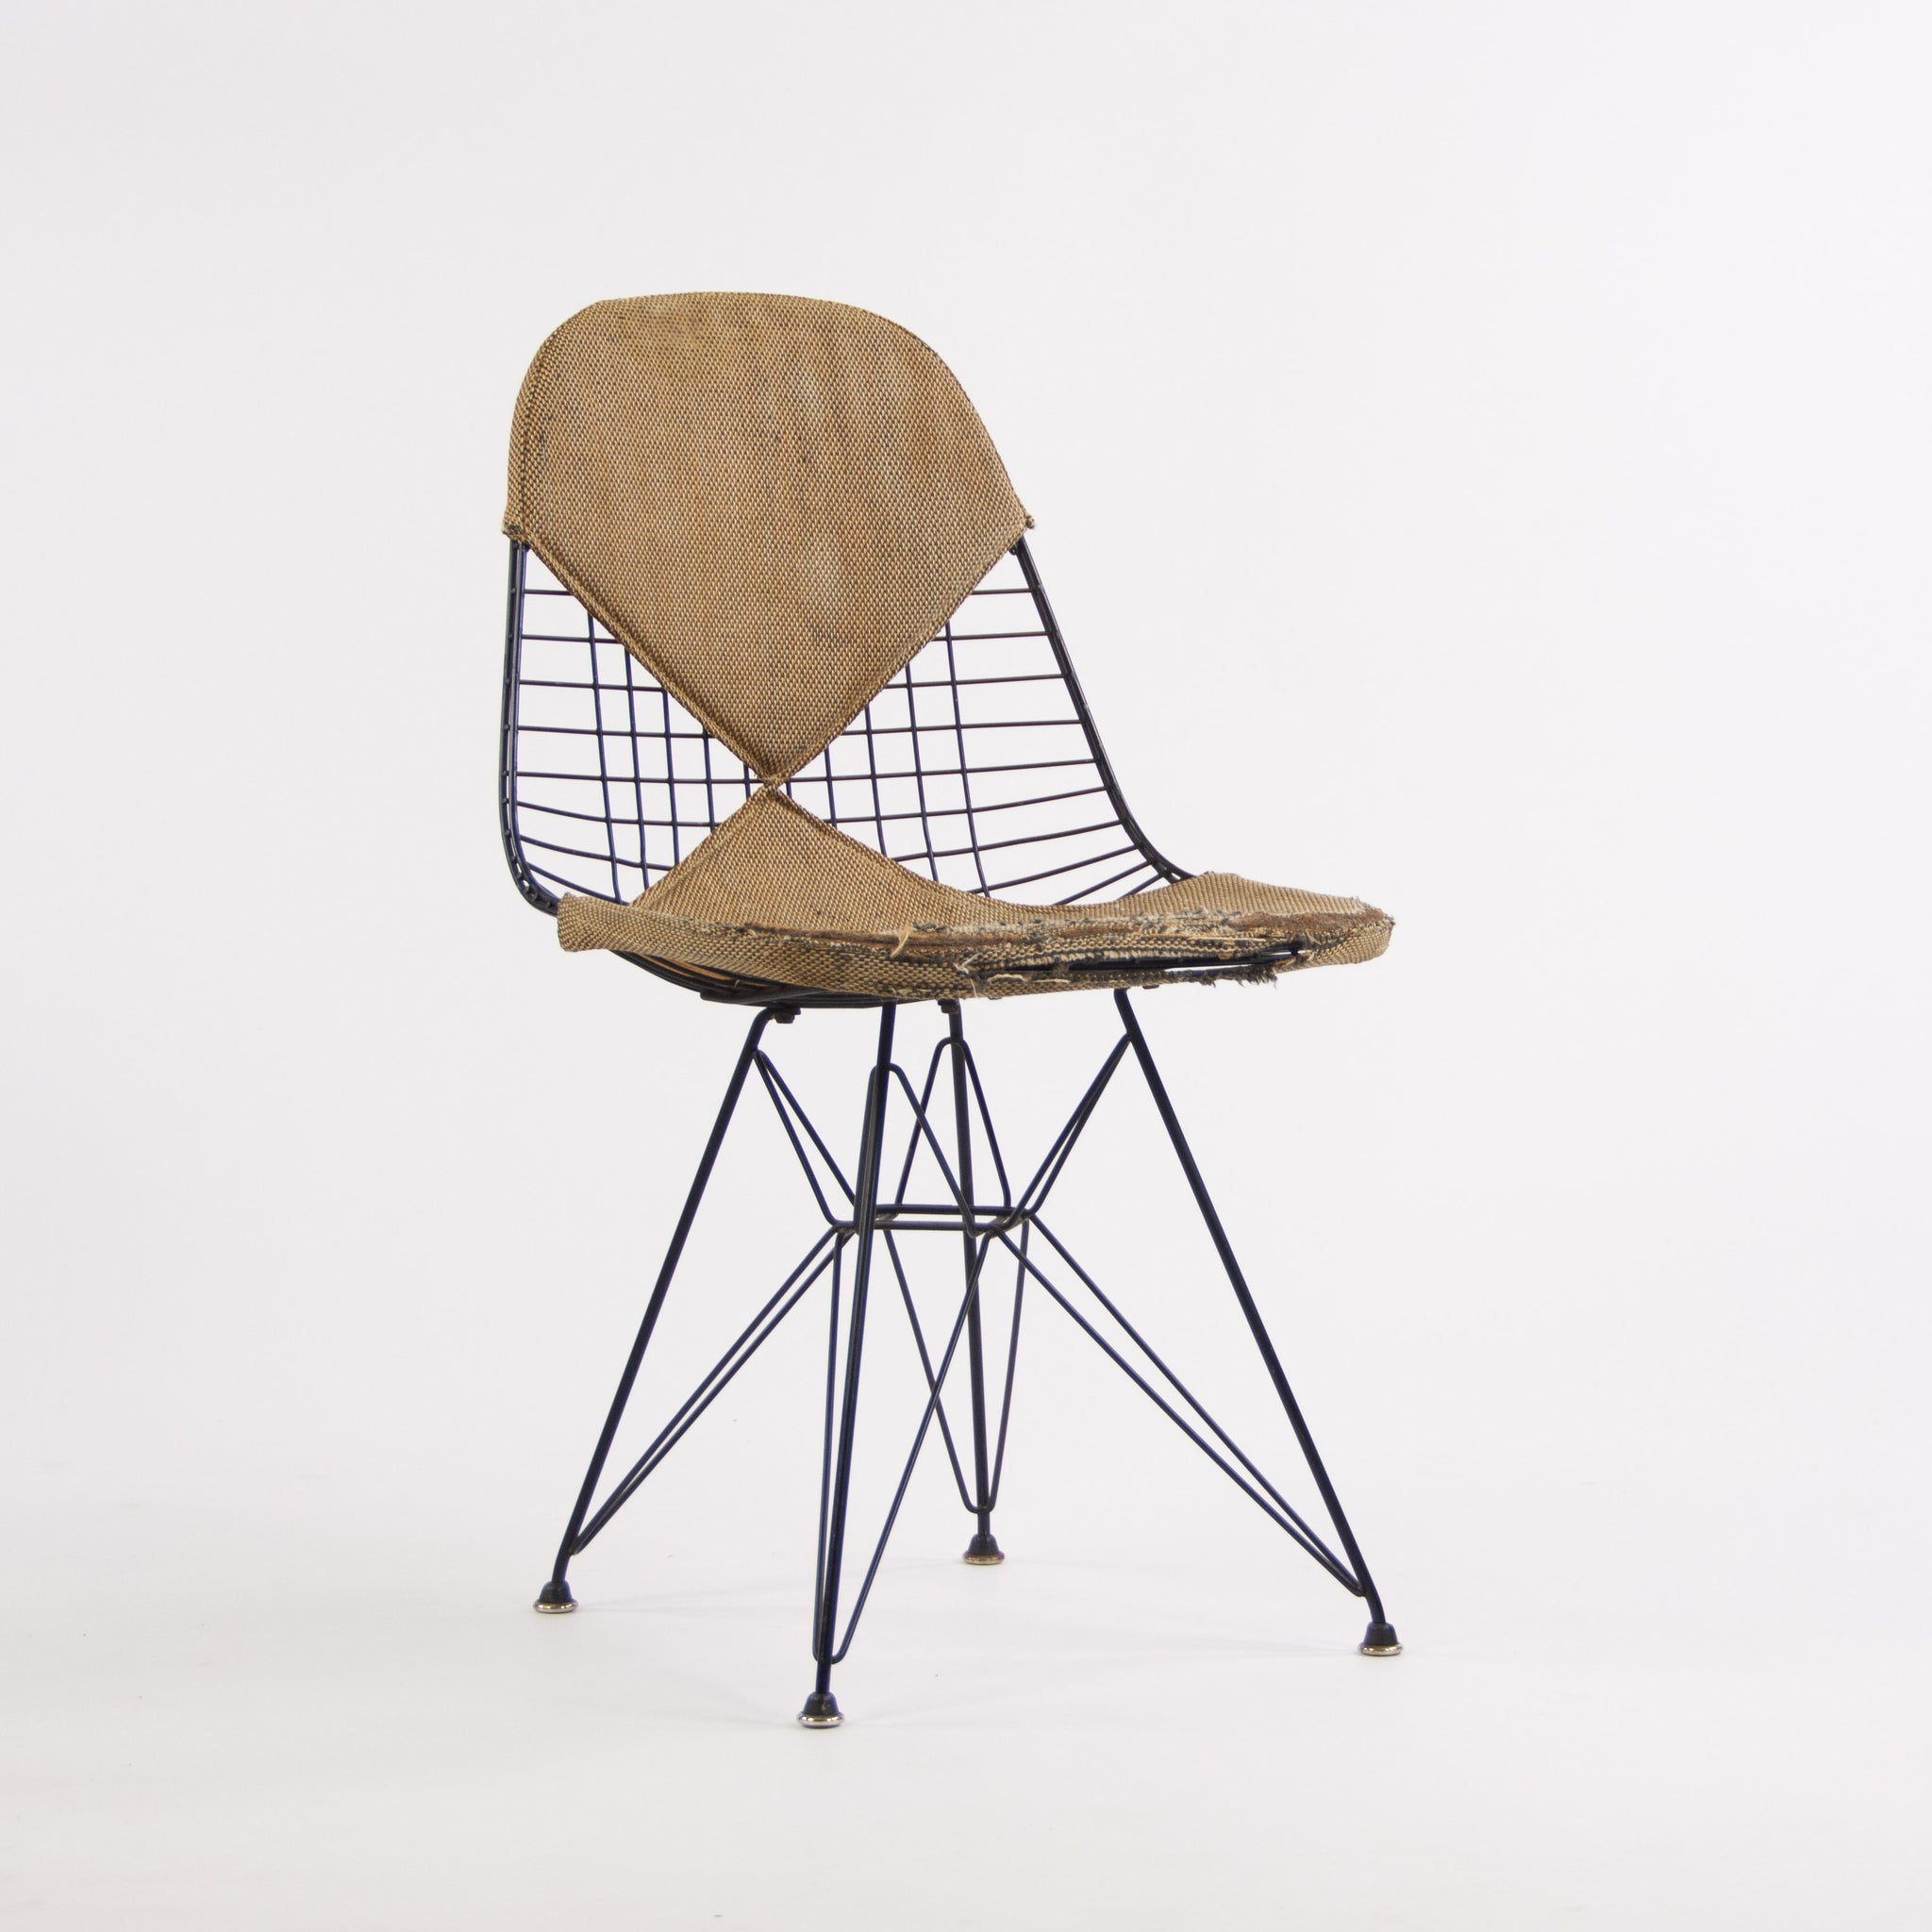 SOLD 1952 Herman Miller Eames Wire Eiffel Tower Chair DKR-2 Original Venice Label